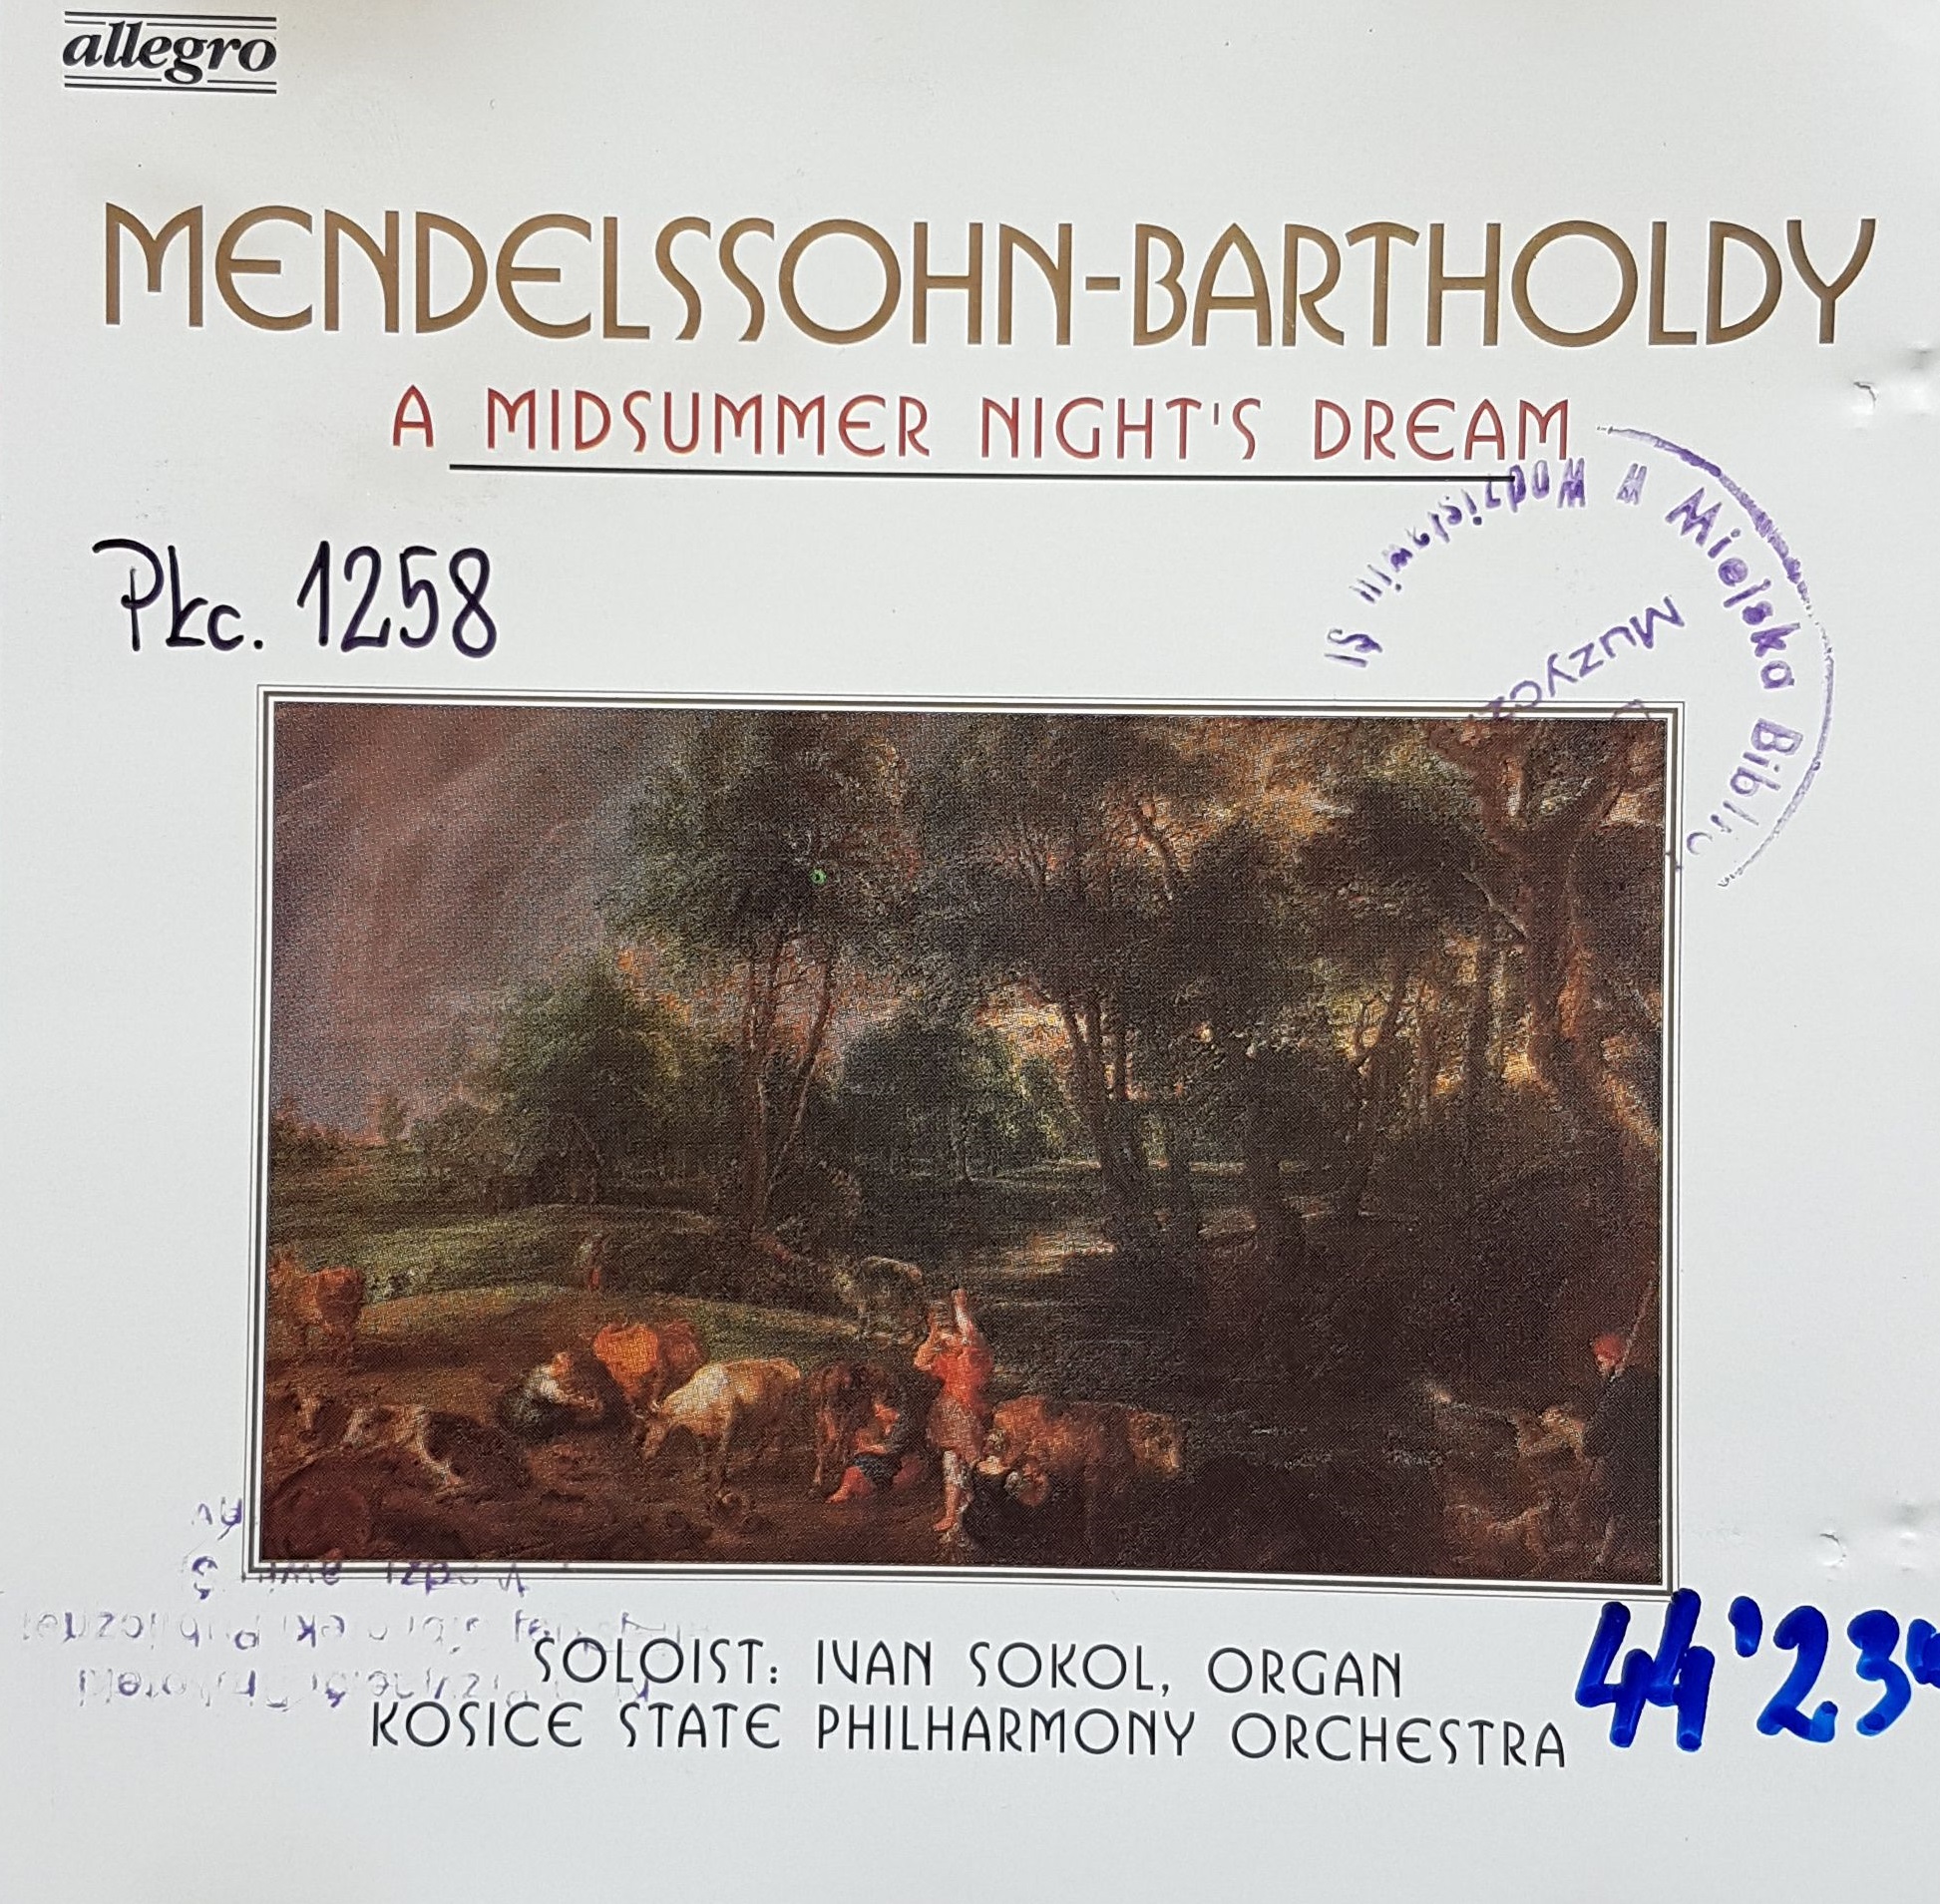 MENDELSSOHN-BARTHOLDY FELIX, POULENC FRANCIS - A Midsummer Nights Dream / Concerto In G Minor For Organ, Strings And Timpani